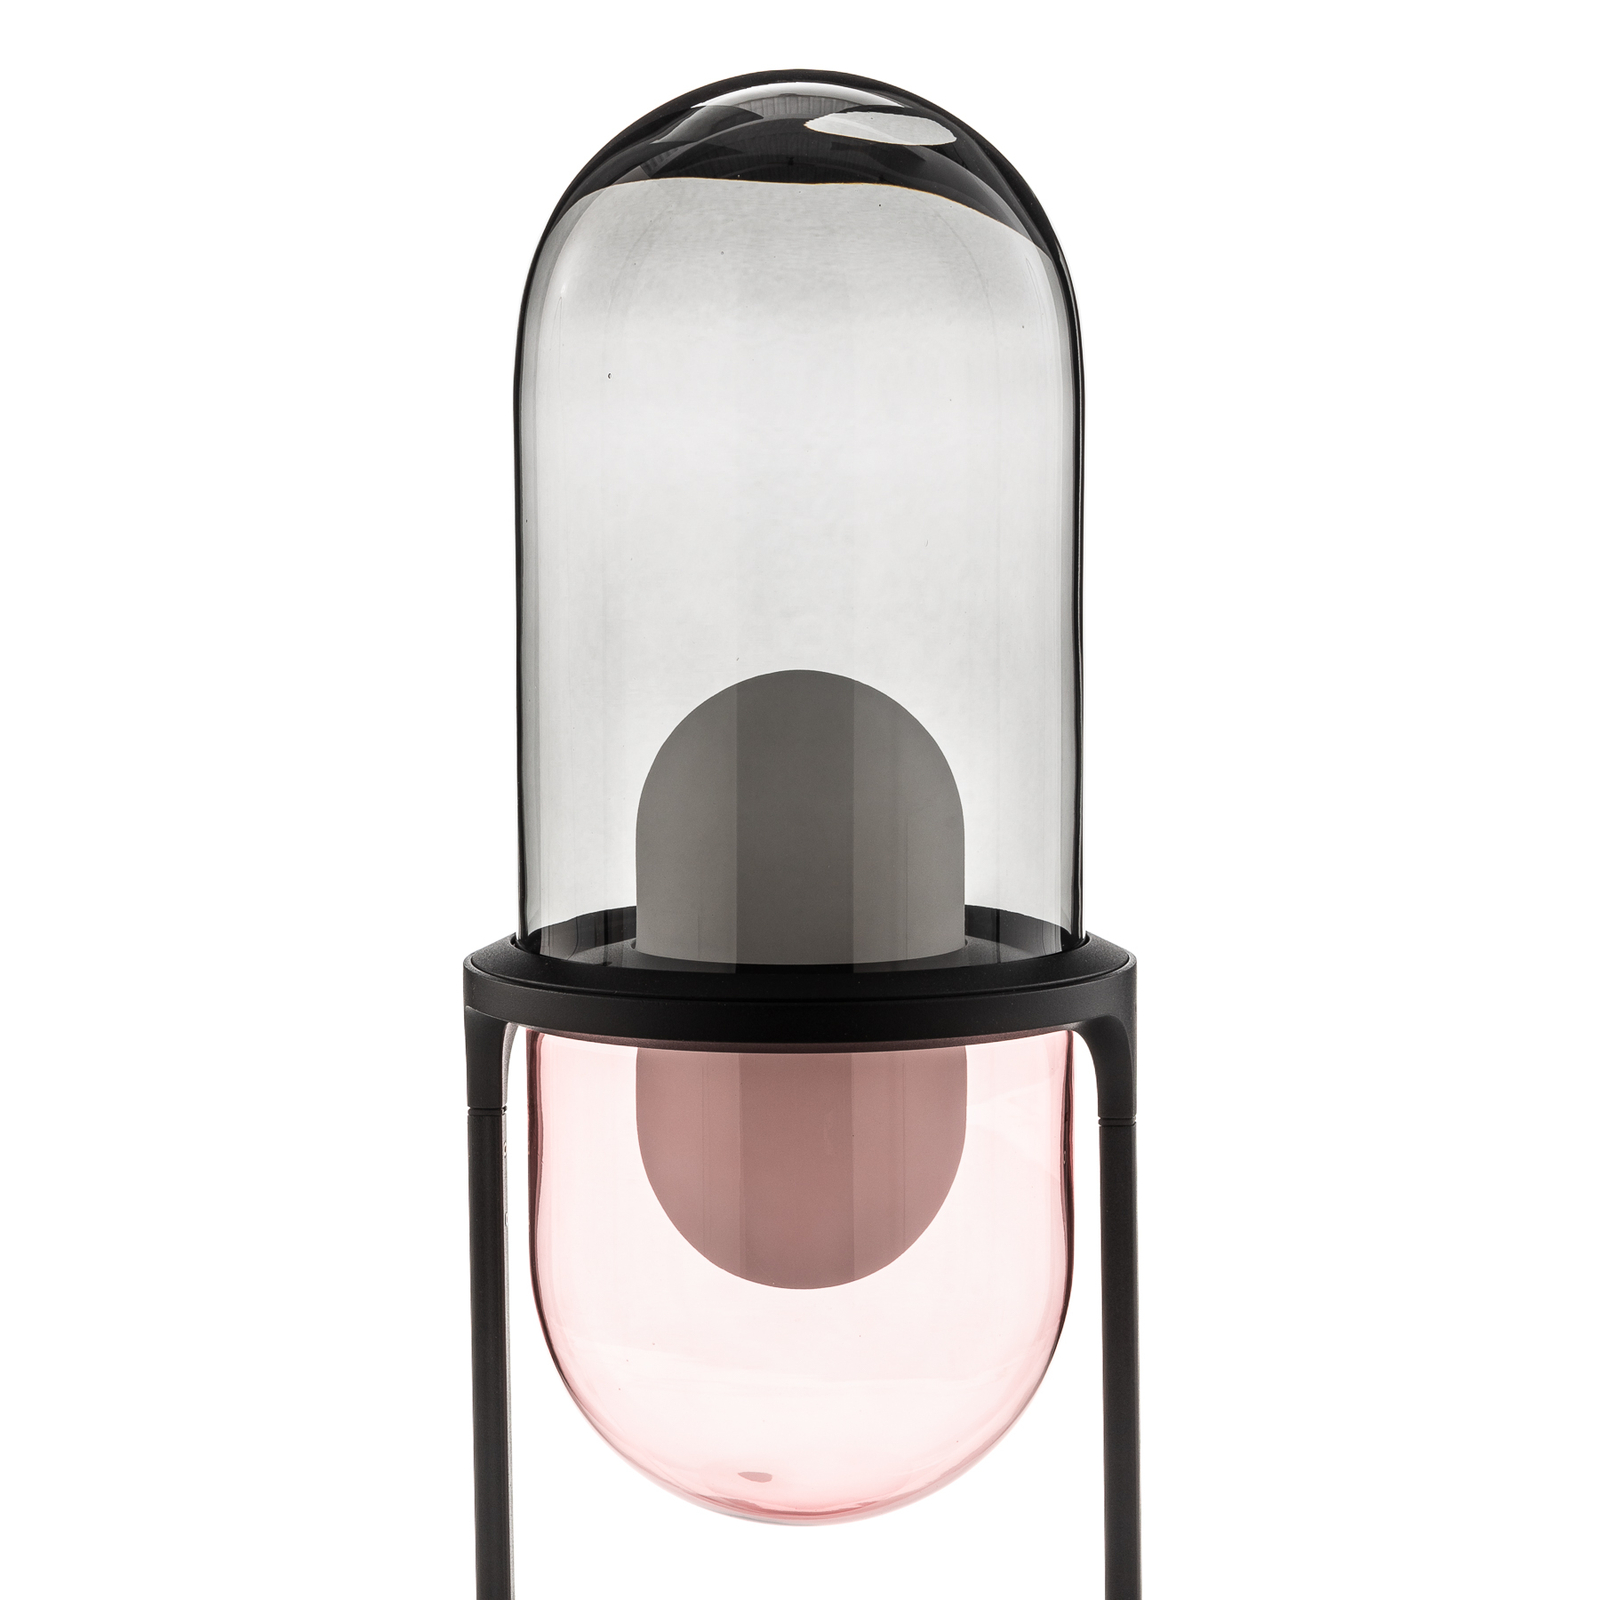 Pille LED tafellamp grijs/roze